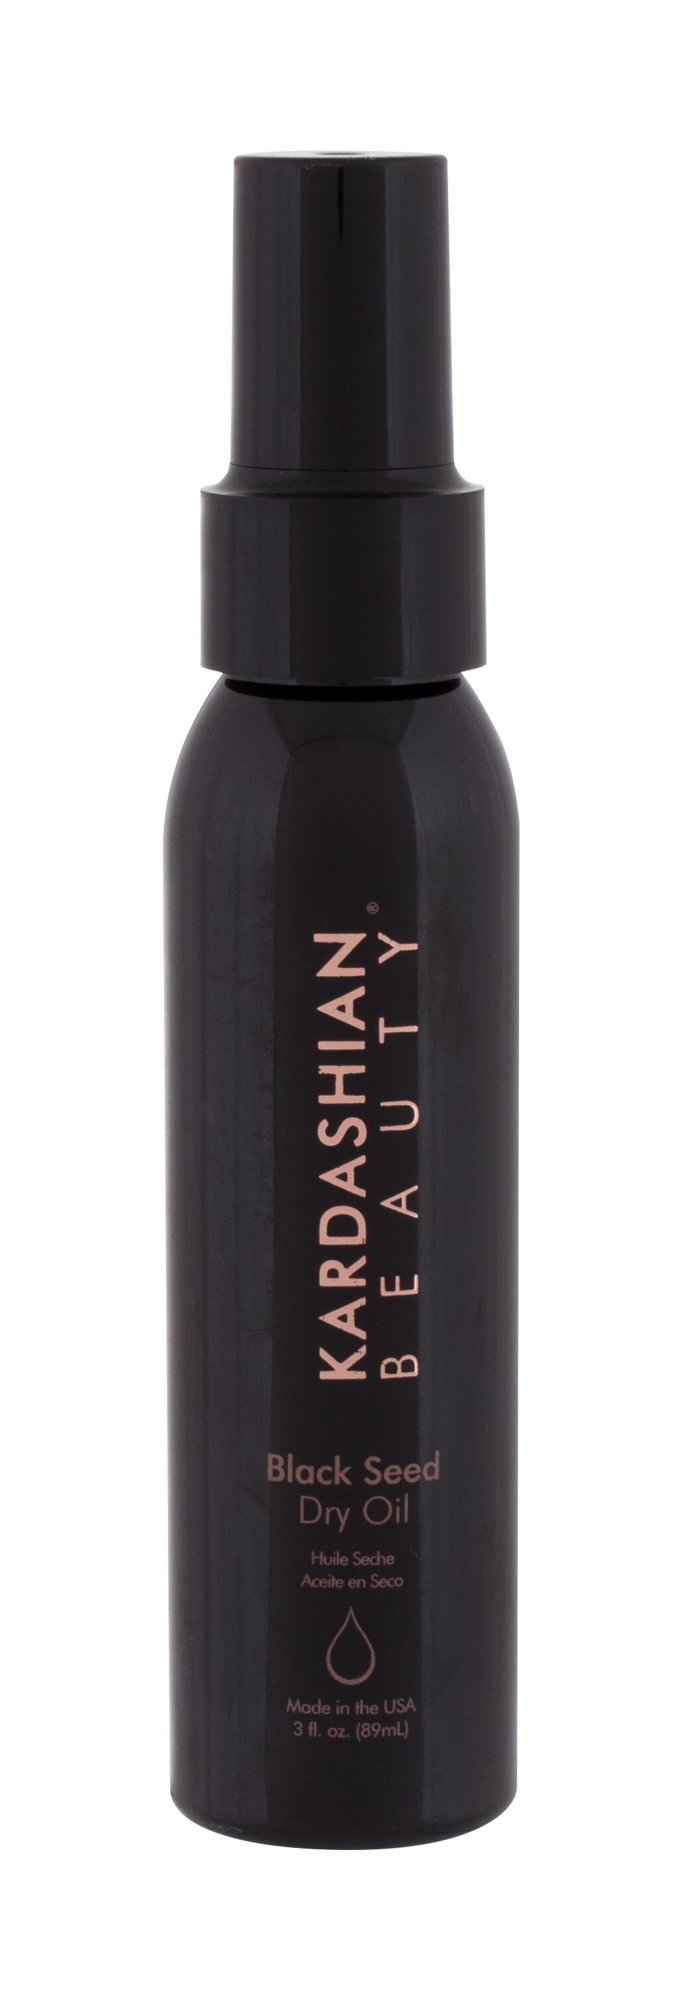 Kardashian Beauty Black Seed Oil 89ml plaukų aliejus